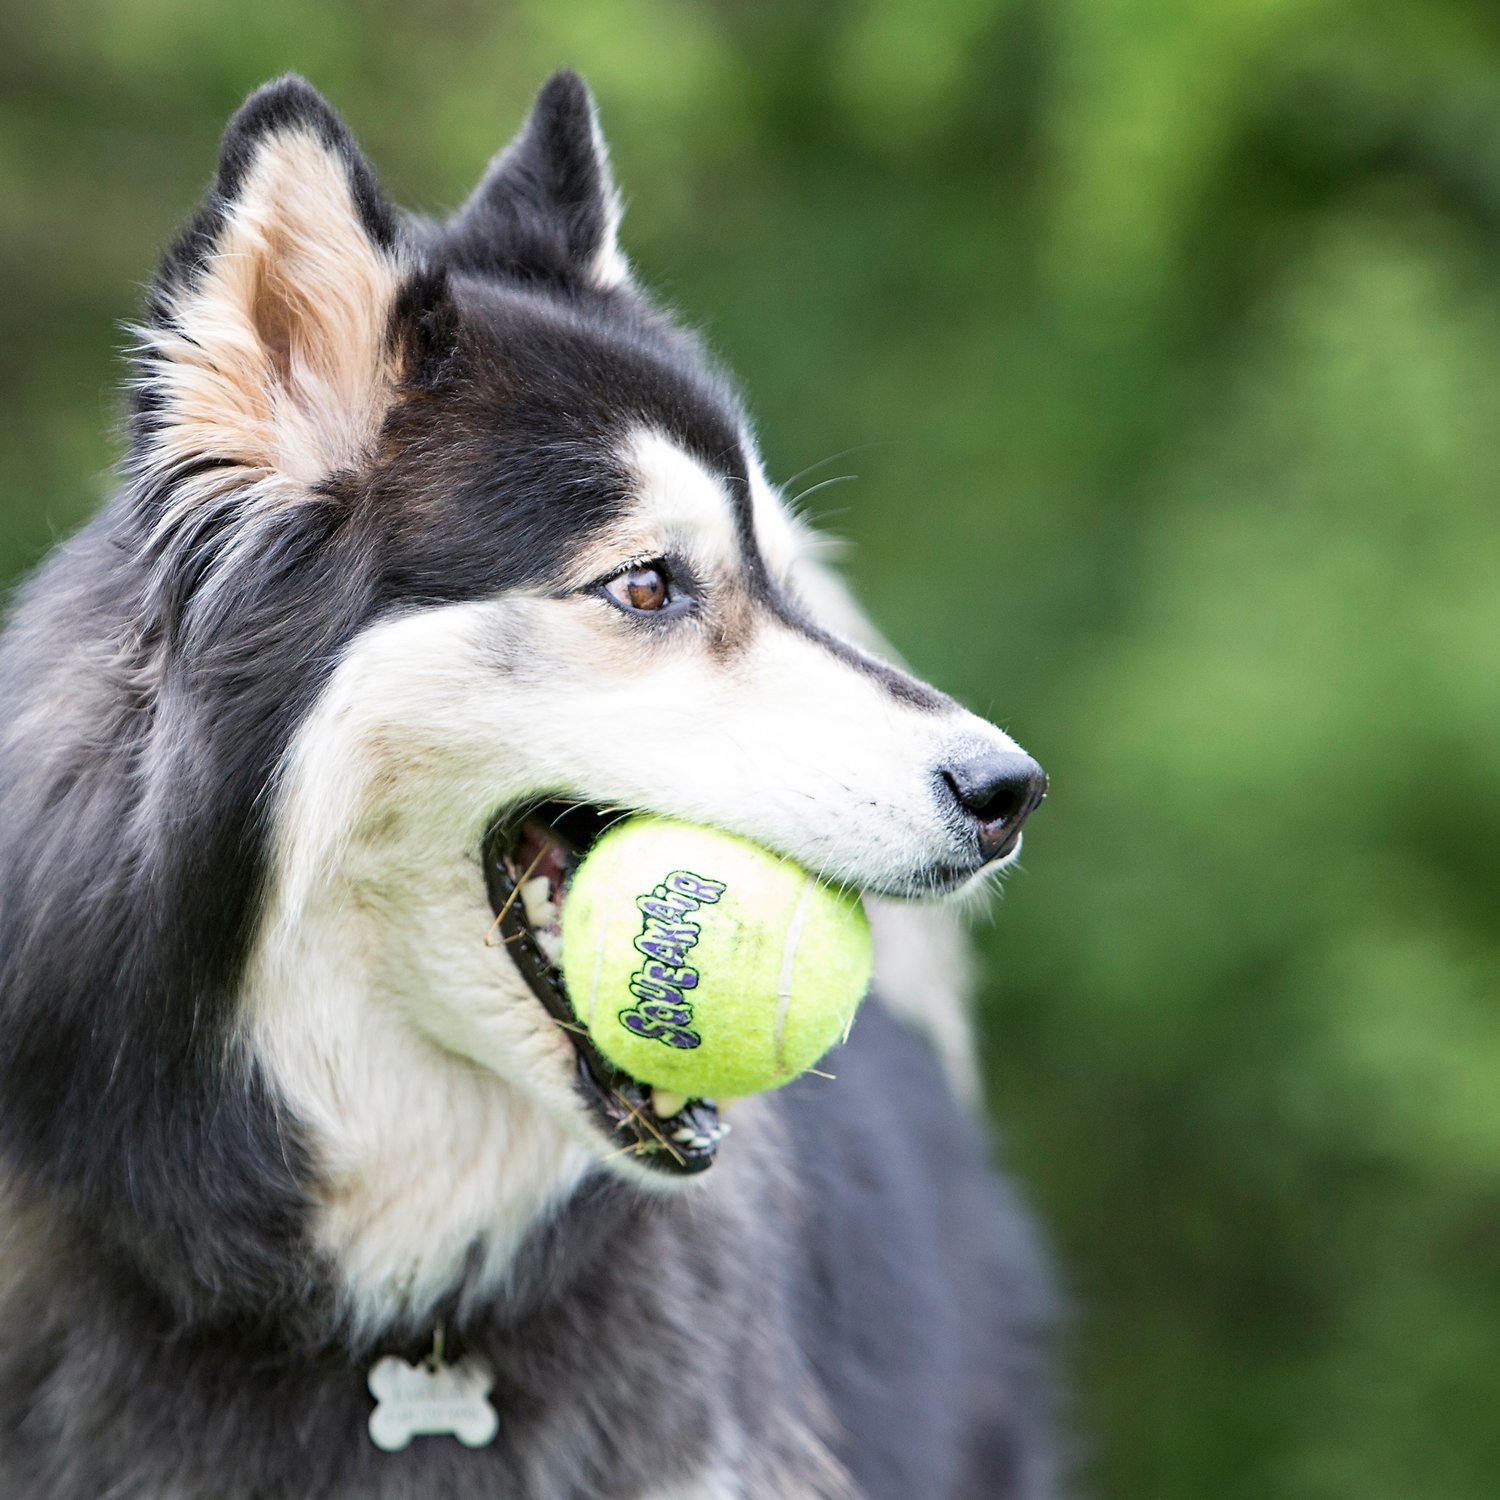 Kong Squeakair mingi de tenis pentru câini - zoom